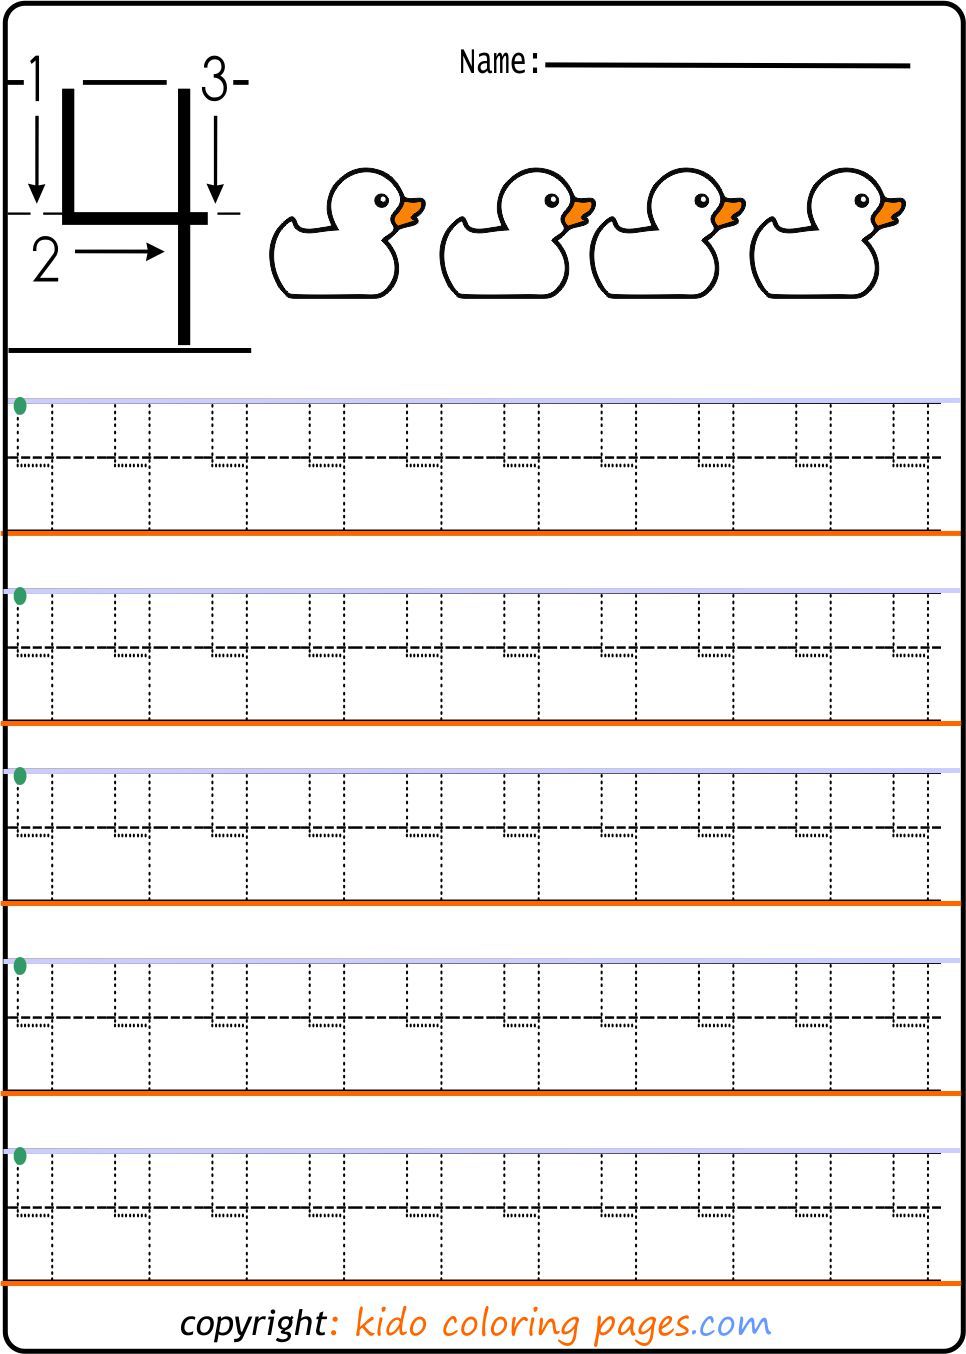 Number tracing worksheets for preschool tracing worksheets kindergarten worksheets math worksheets